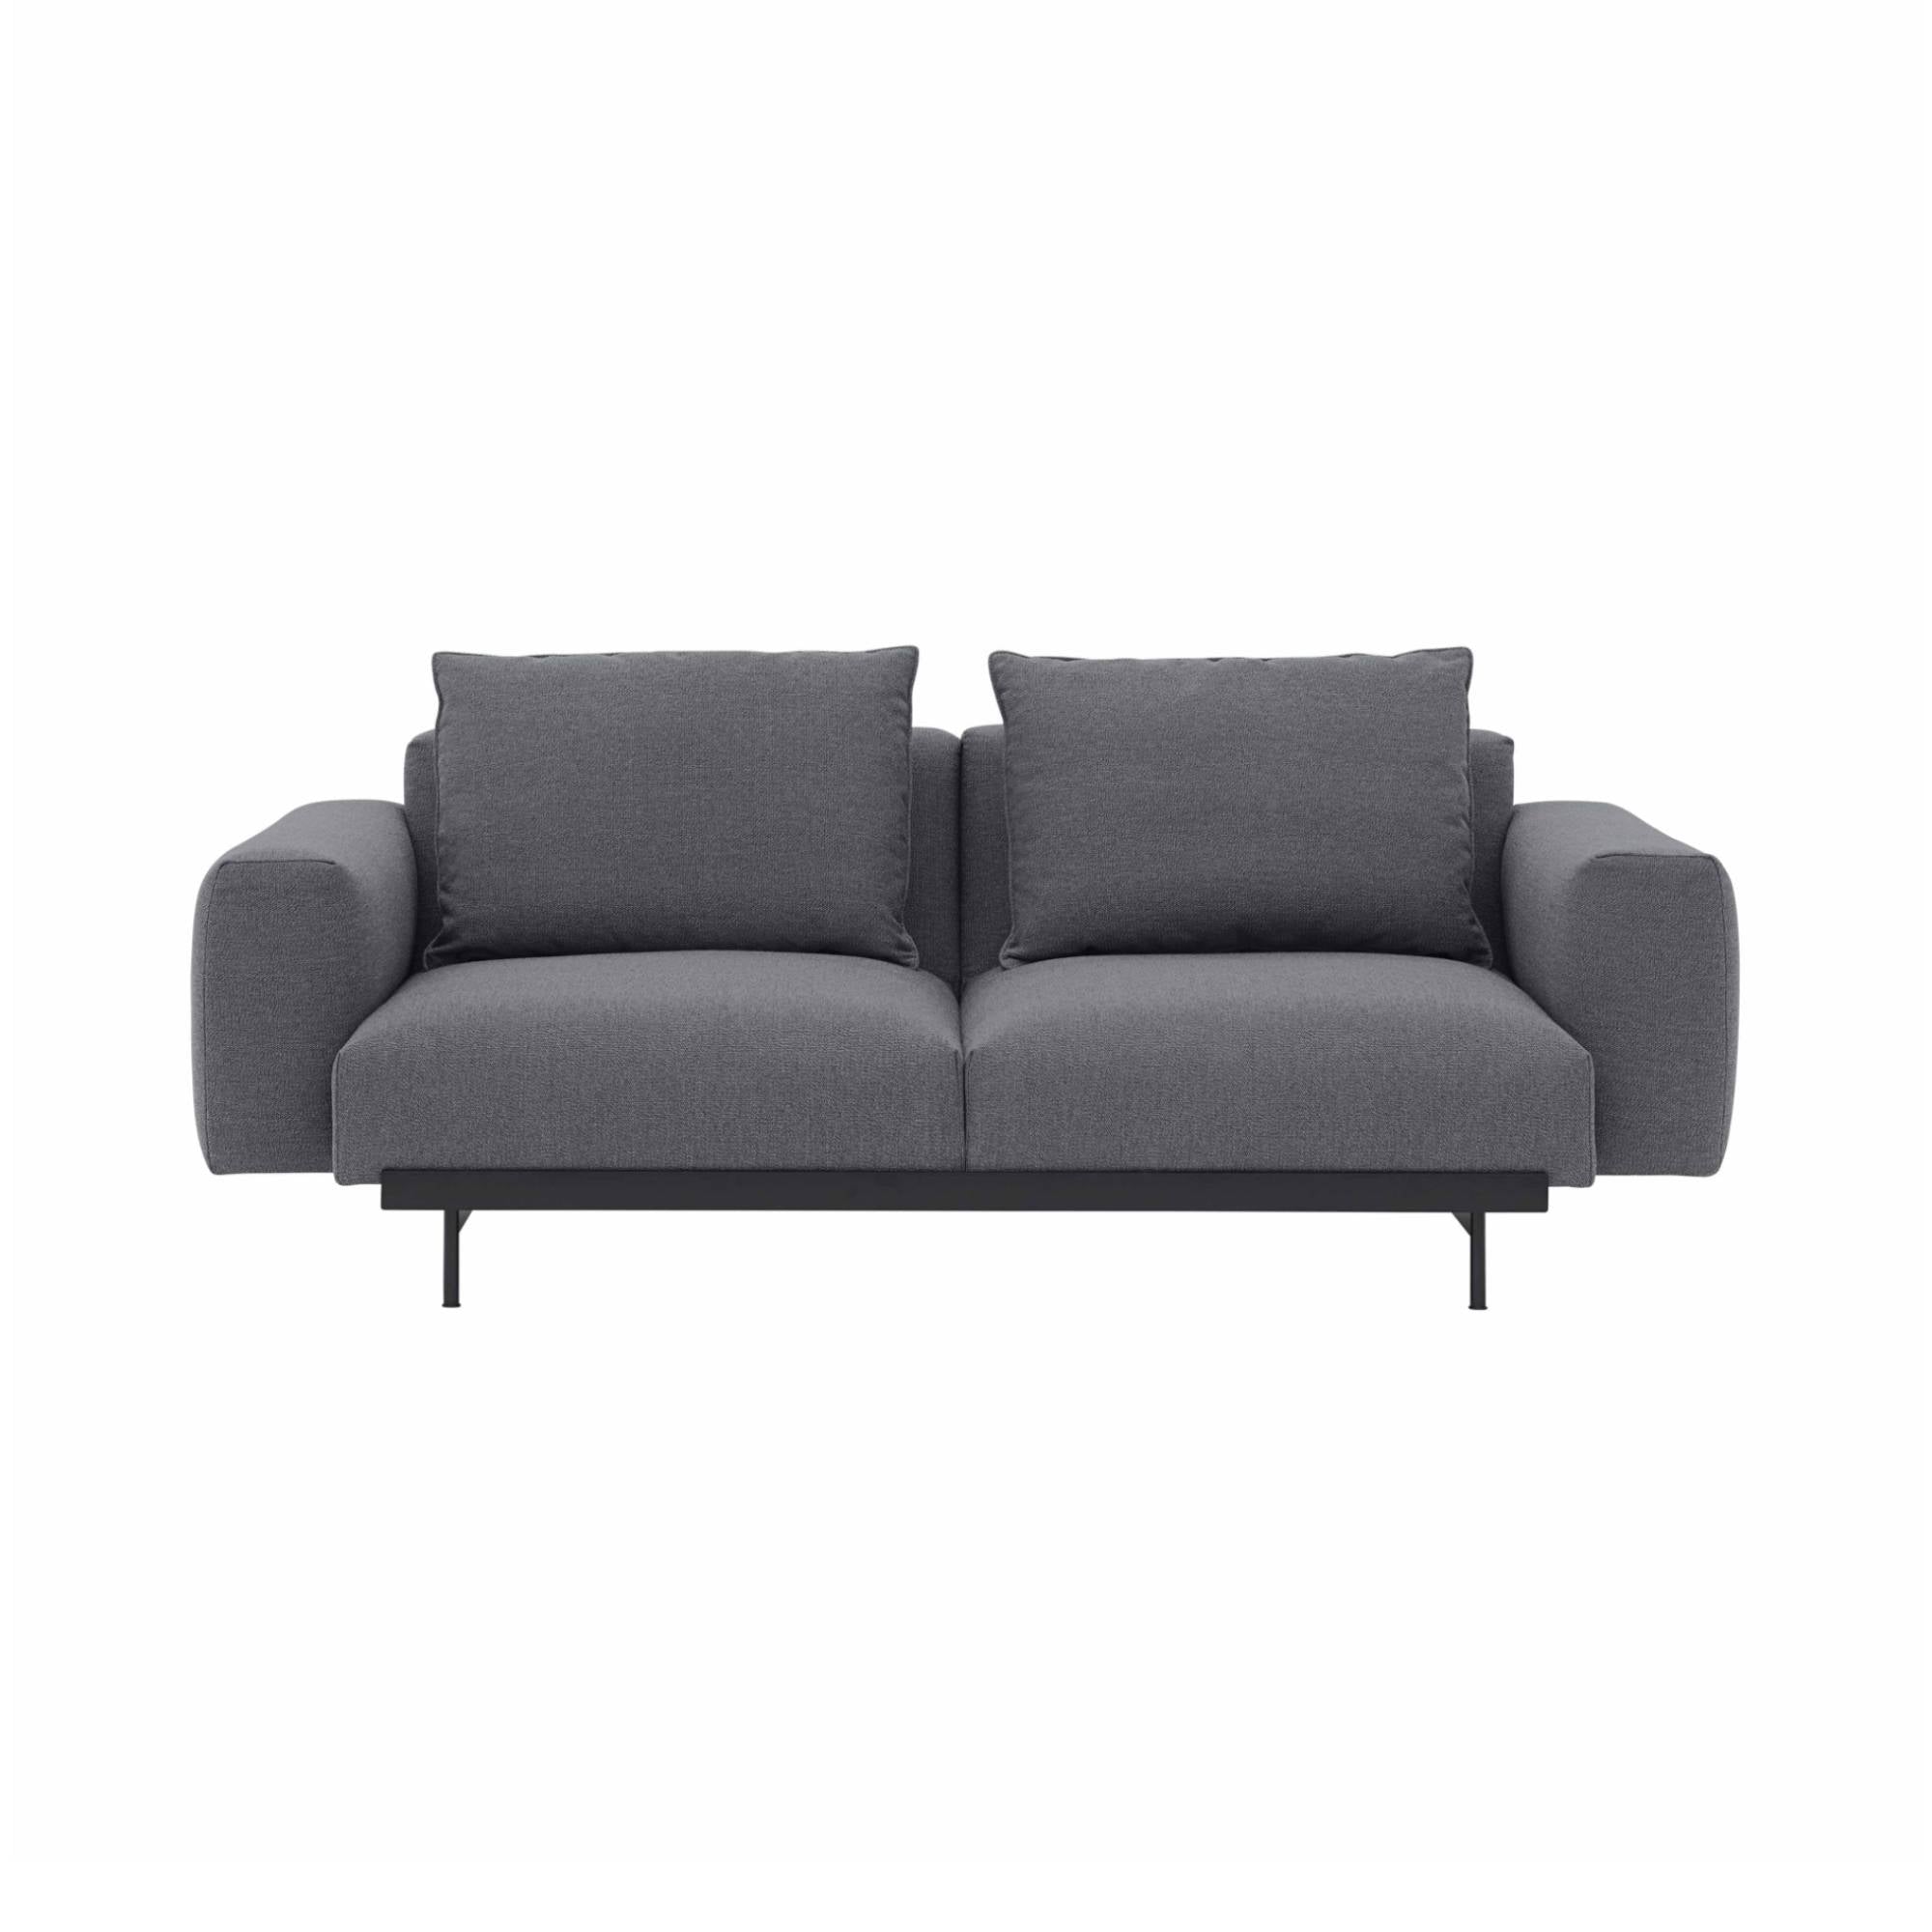 In Situ Modular Sofa: 2 Seater + Configuration 1